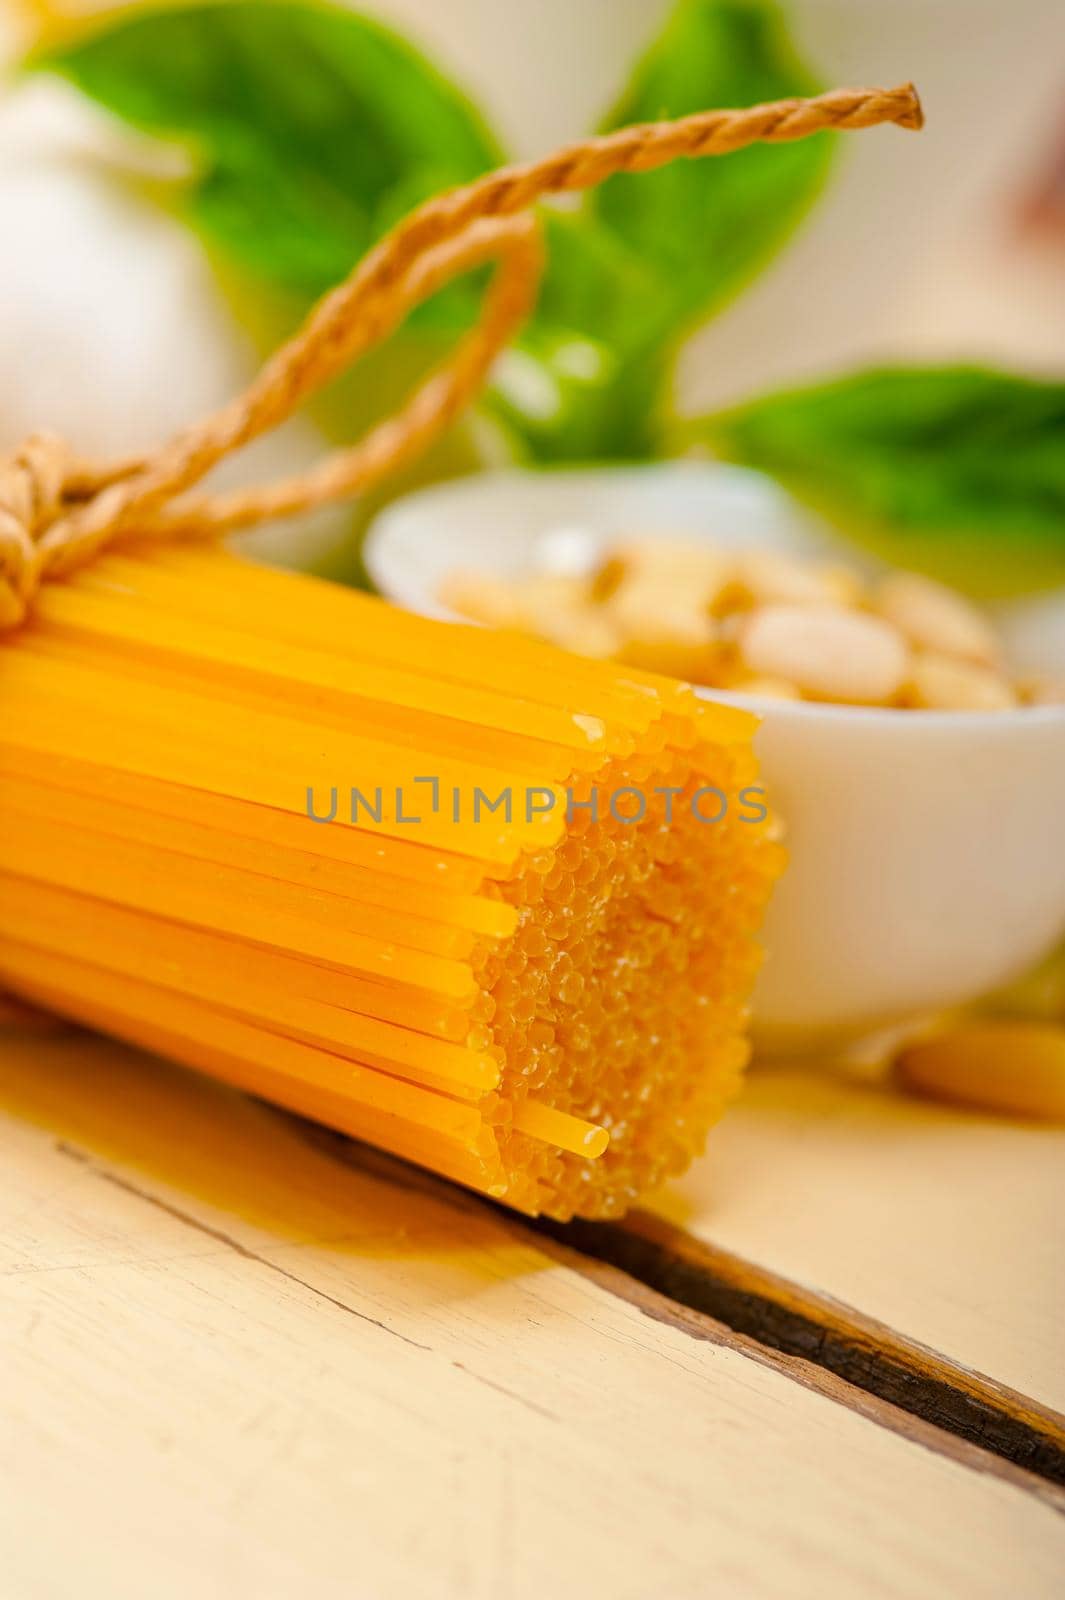 Italian traditional basil pesto pasta ingredients by keko64